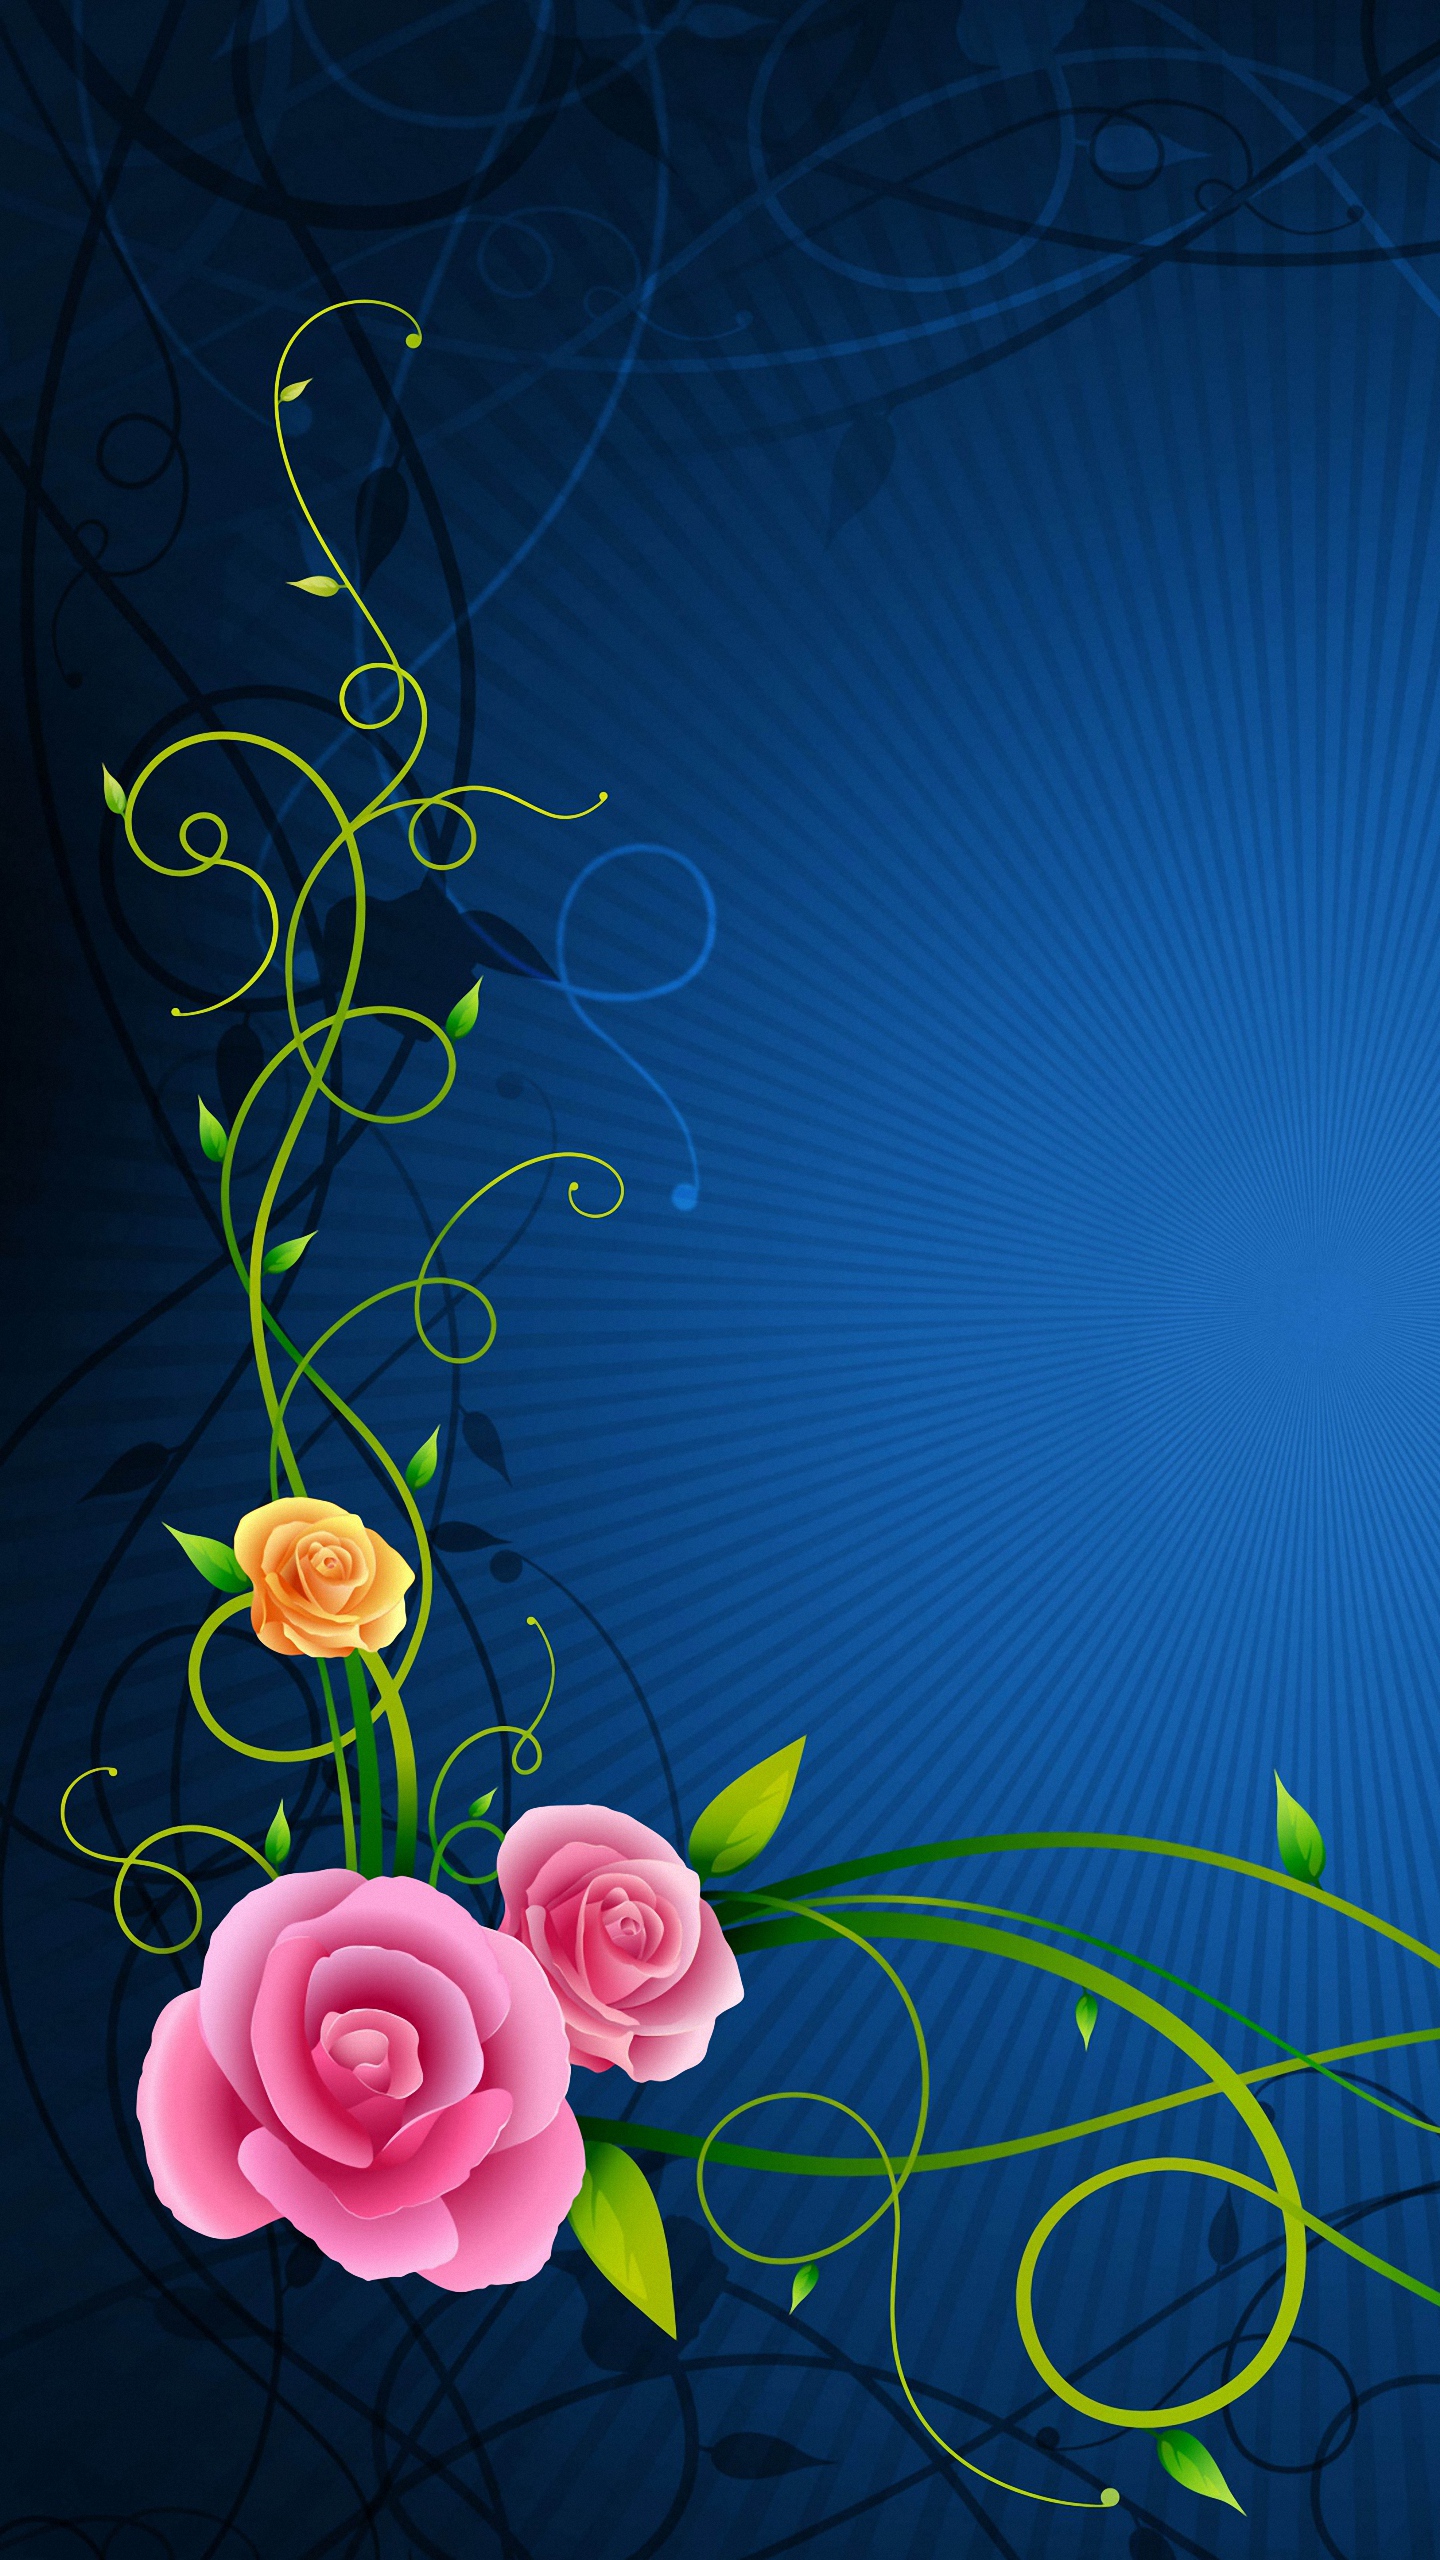 Flowers Lines Patterns Samsung Galaxy S6 S7 Wallpaper HD